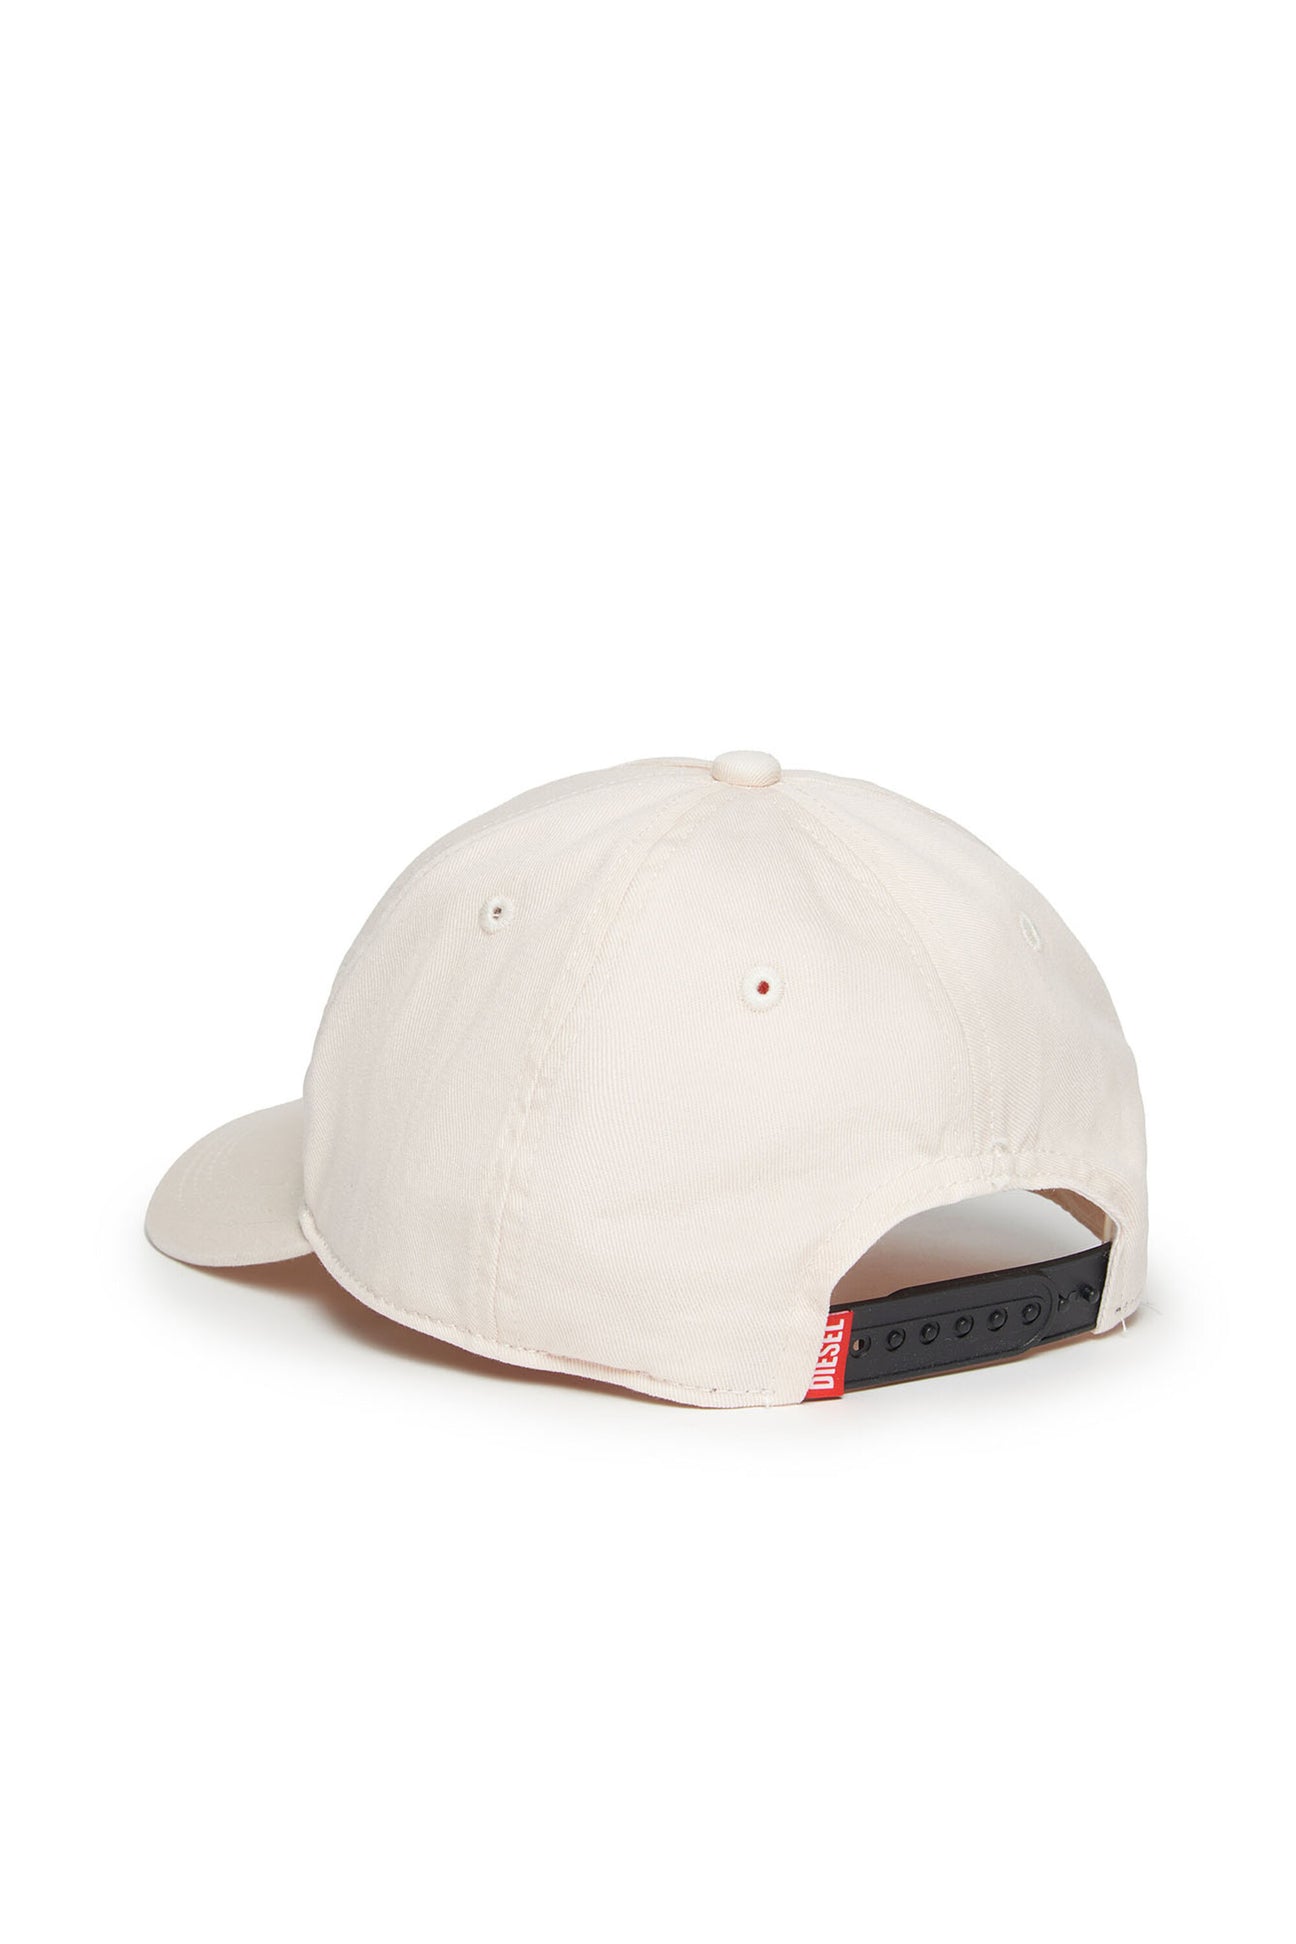 Baseball cap with breaks and logo Baseball cap with breaks and logo